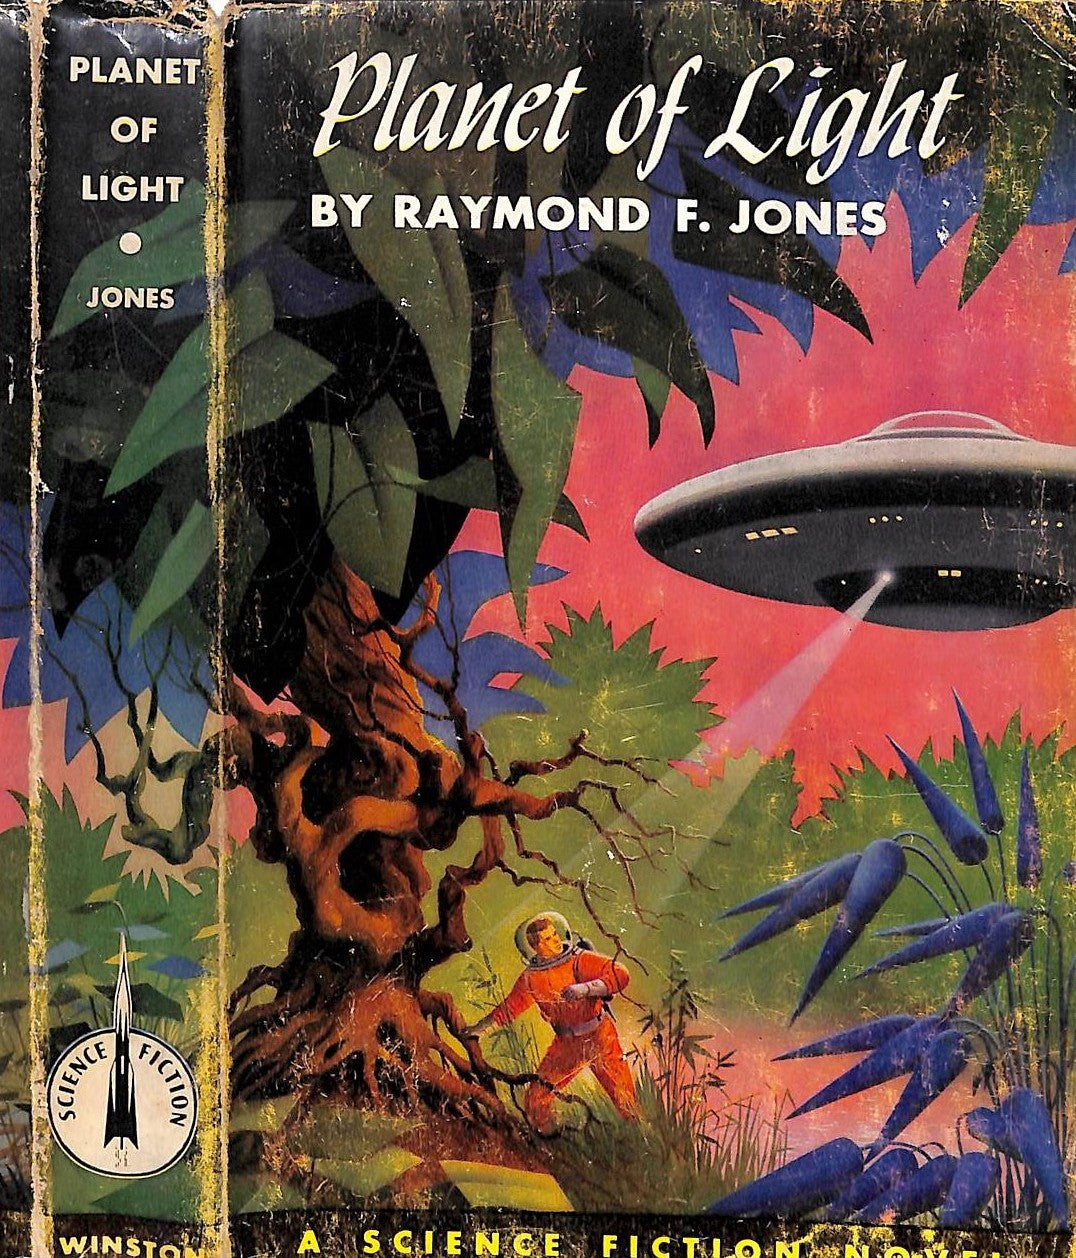 "Planet of Light" 1953 JONES, Raymond F.